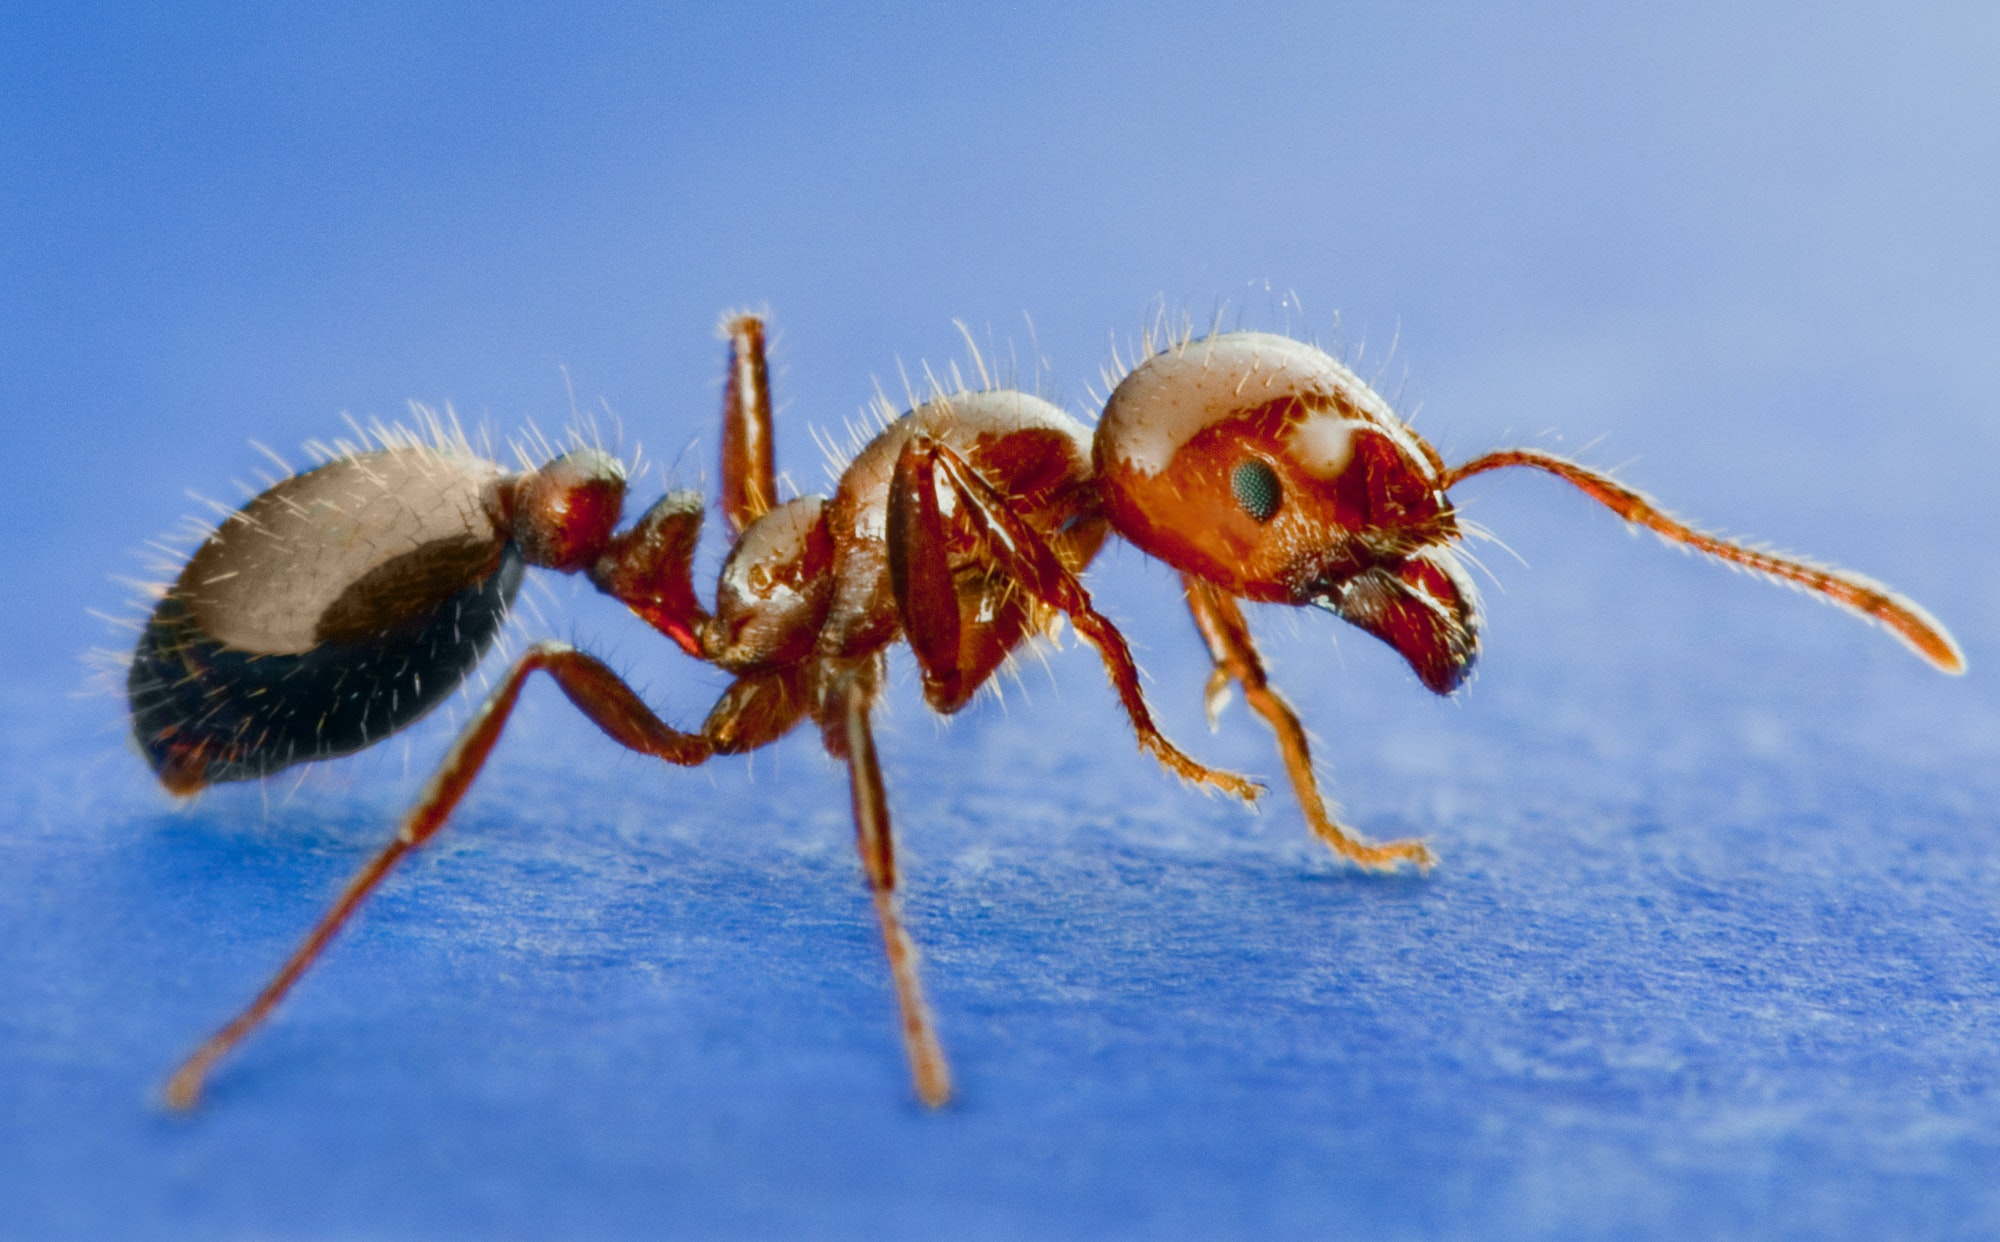 species to eradicate  - Fire ants